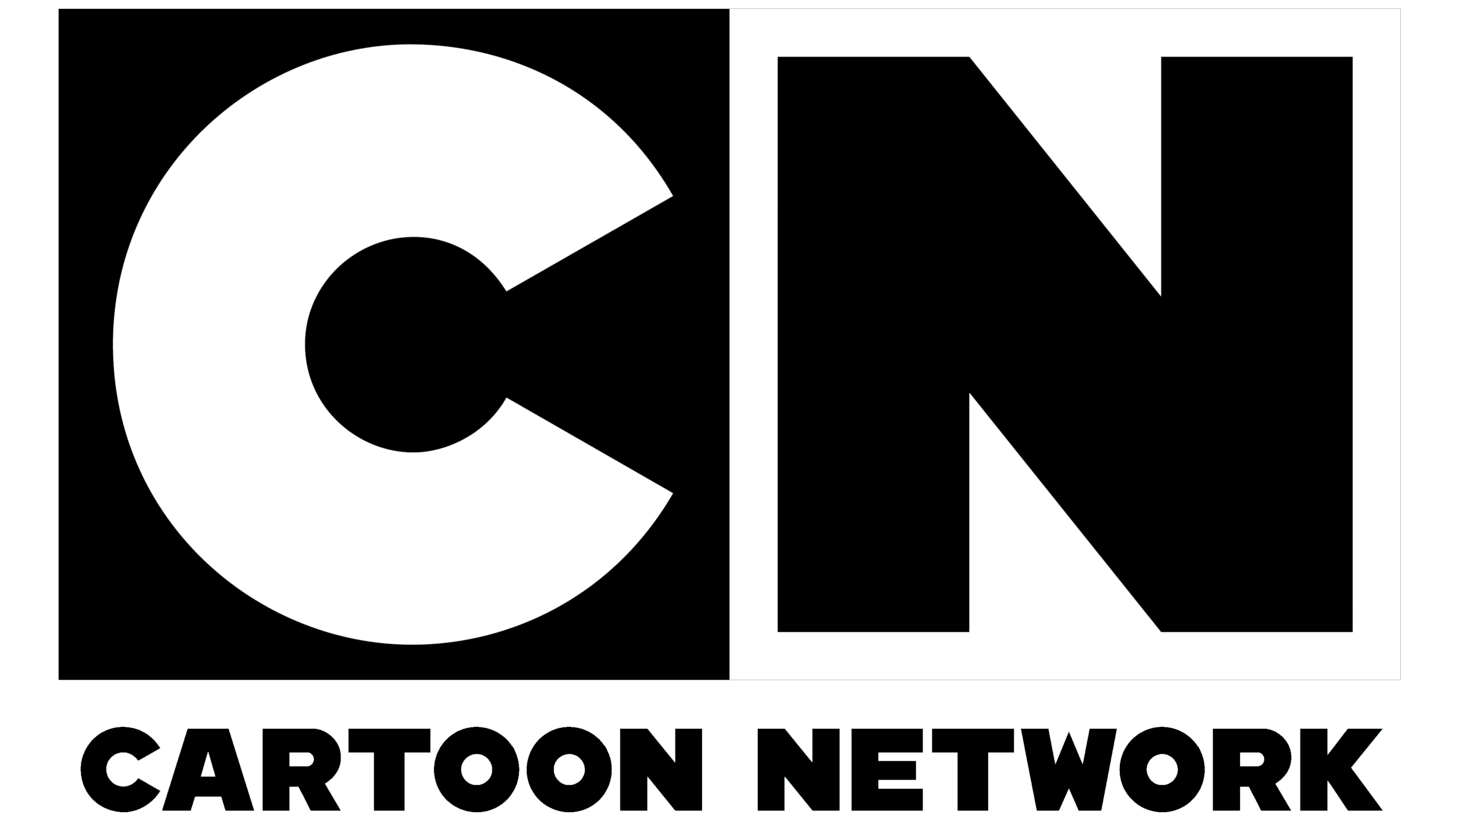 Cartoon network sign 2010 present